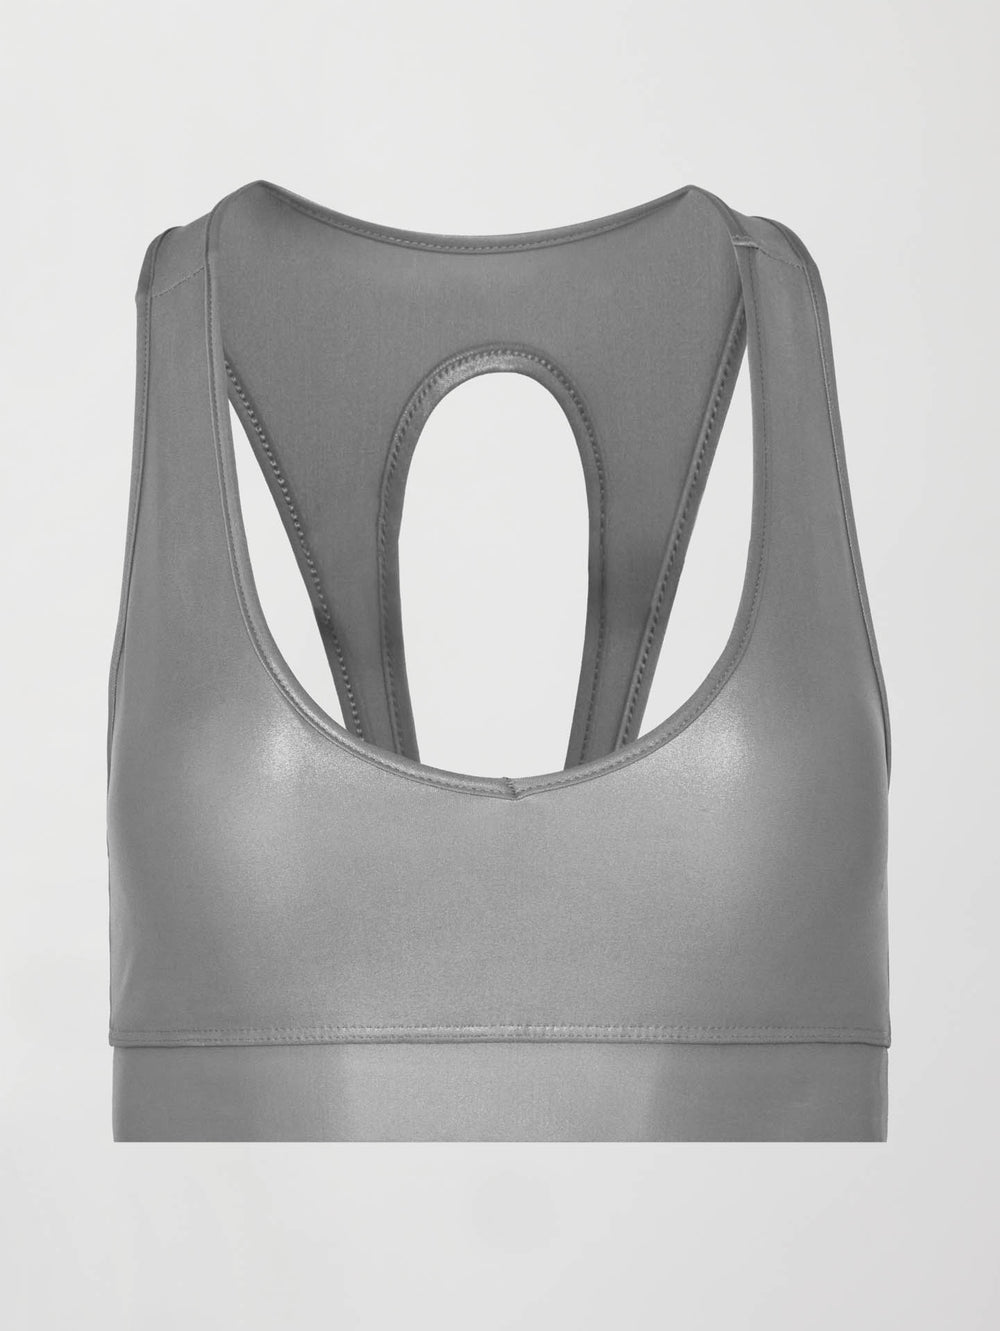 Action Bra 2.0 in Takara Shine - Steel Grey  Carbon 38 leggings, Carbon 38,  Medium support sports bra